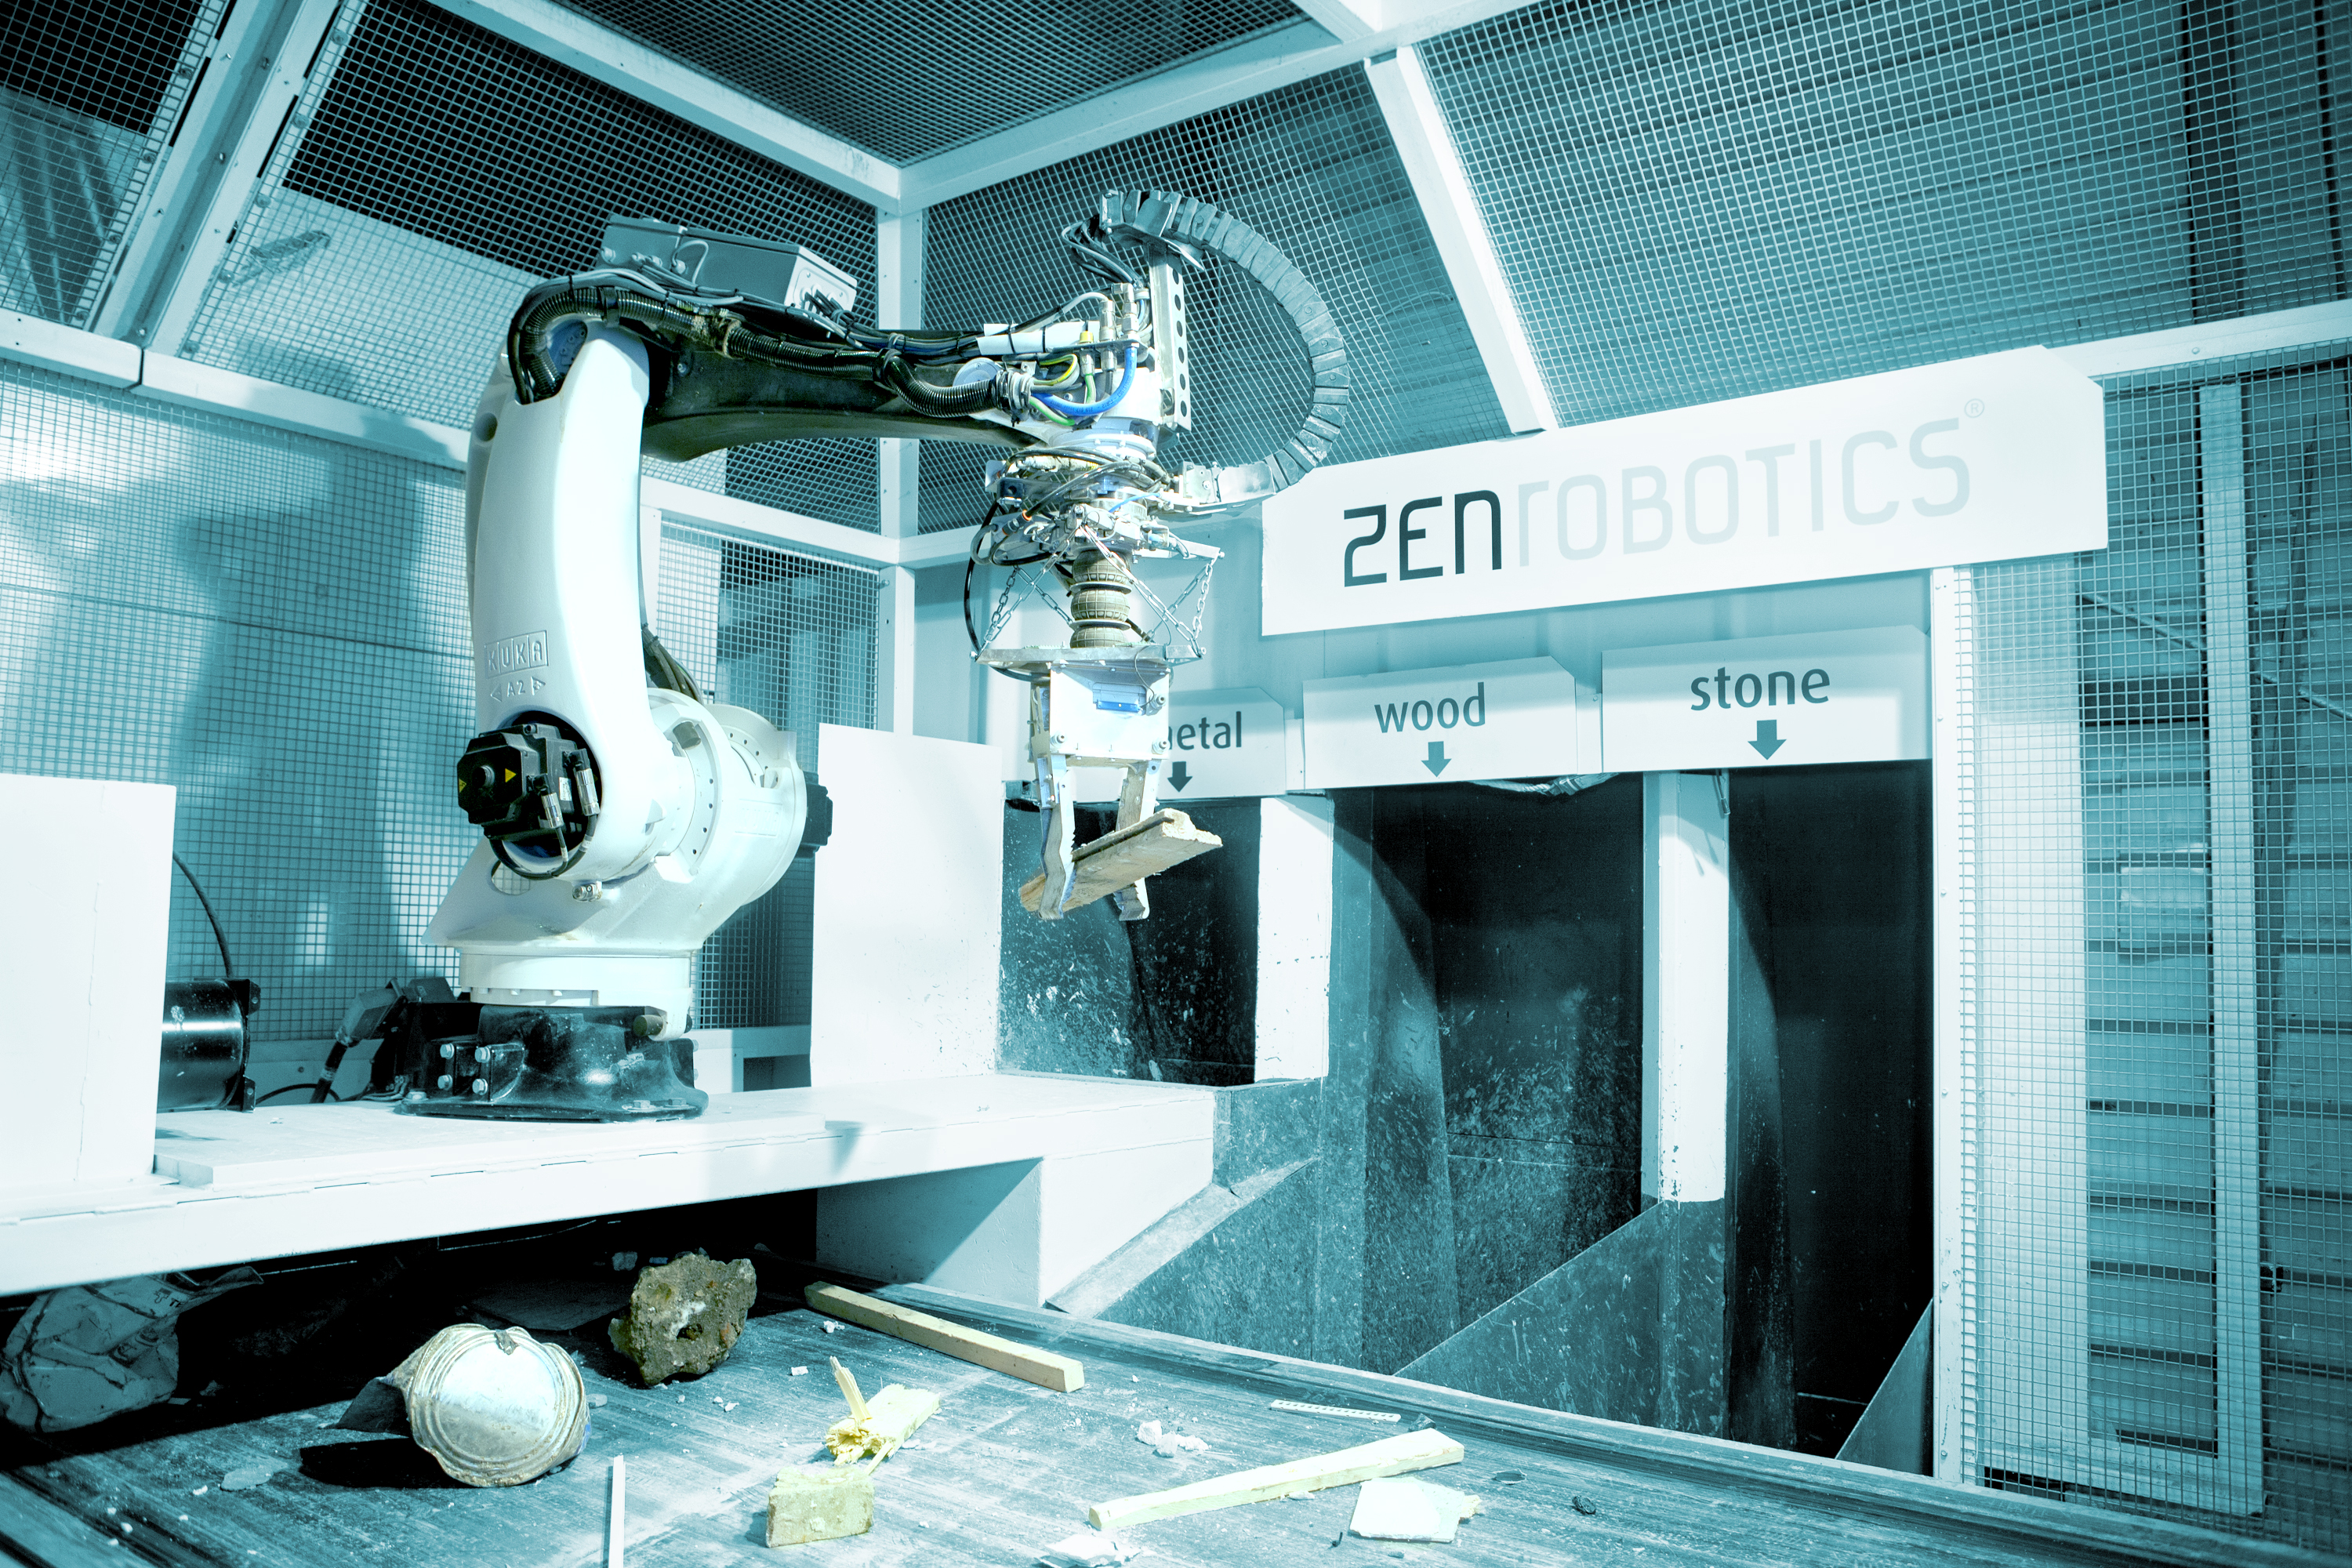 Raccolta differenziata robotica: Zen Robotics